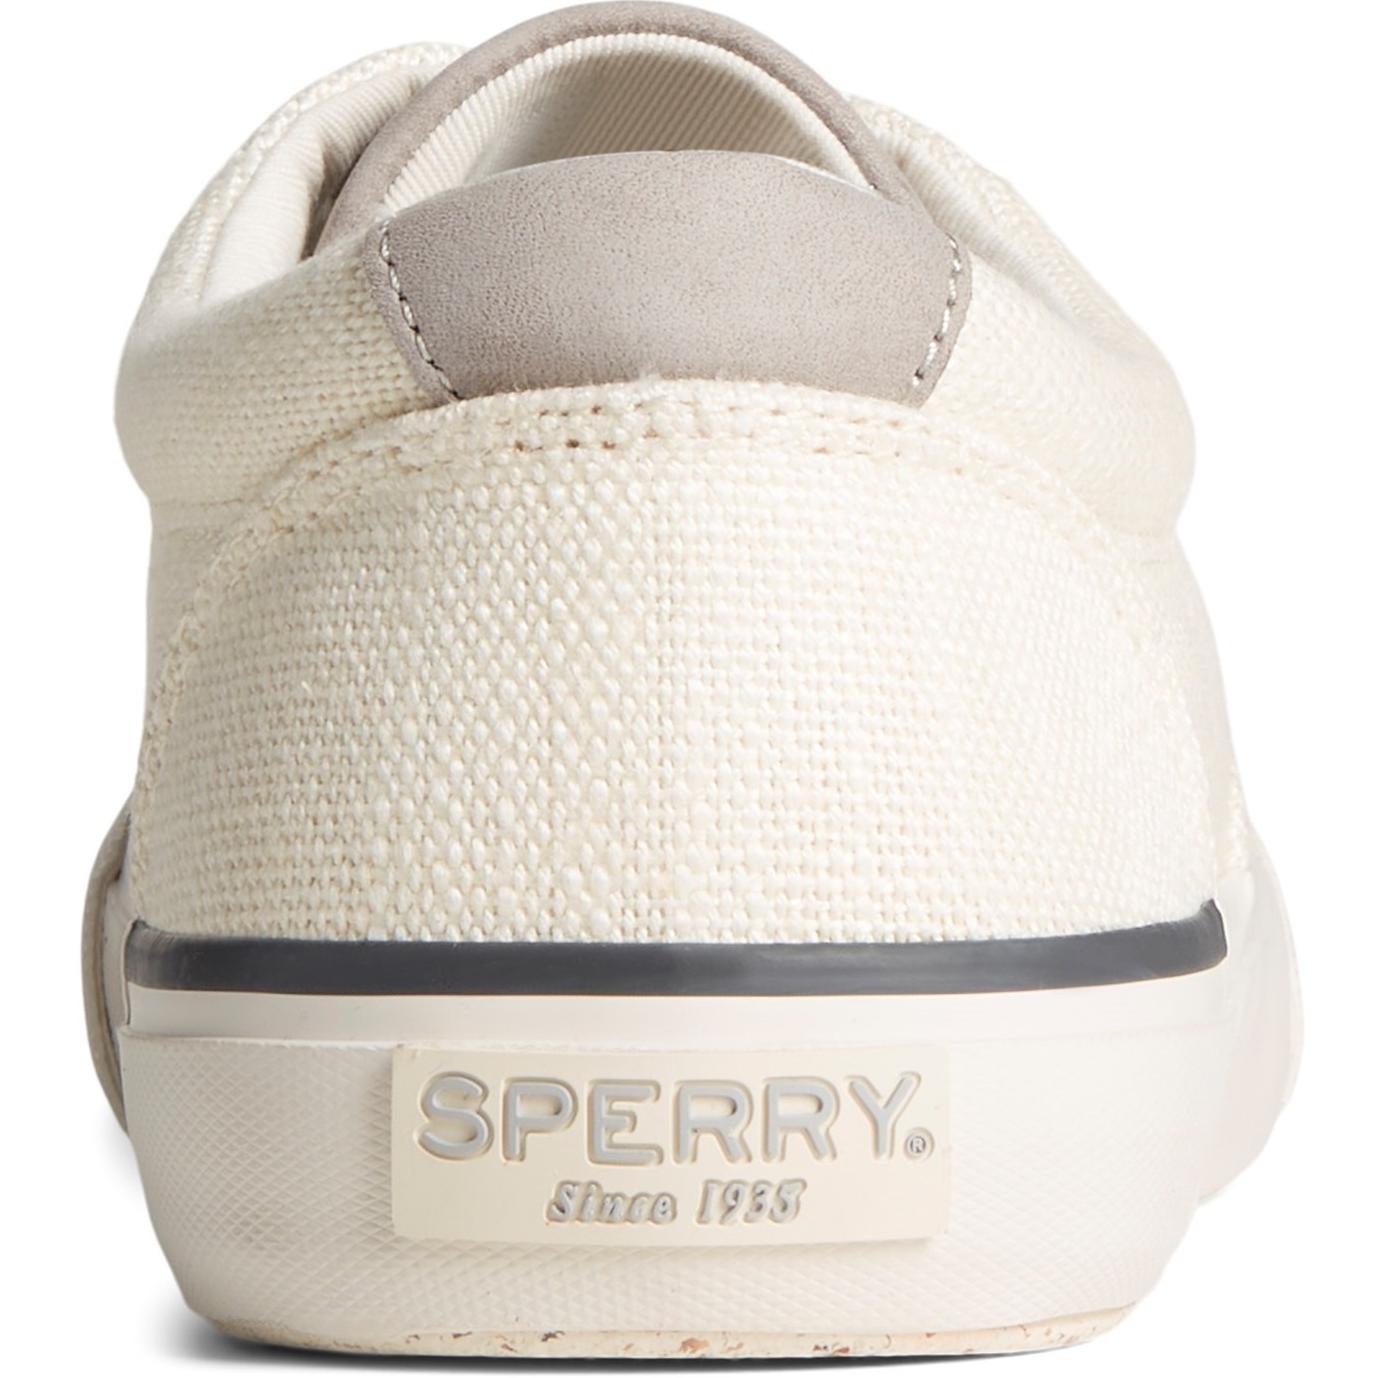 Sperry Top-sider Striper II CVO SC Baja Shoes